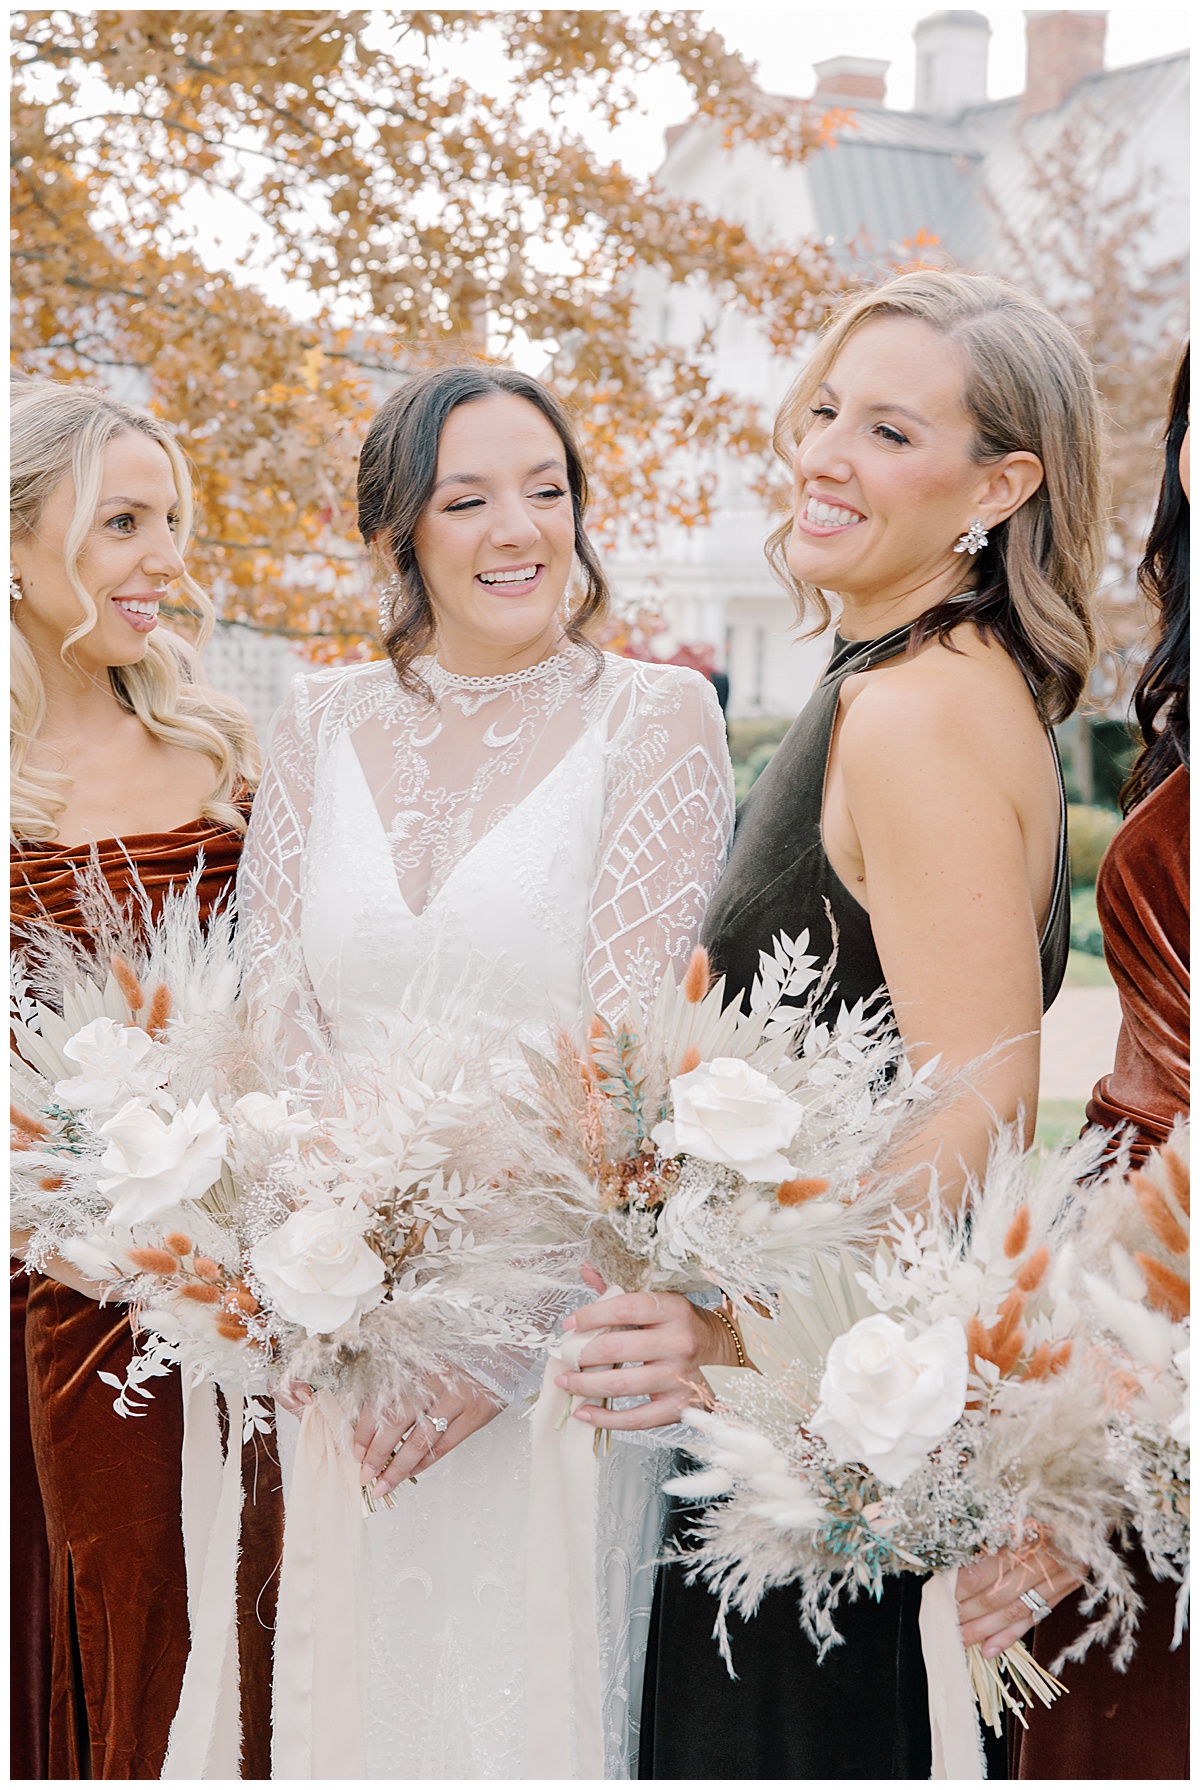 Candid moments with bridesmaids in burnt orange velvet dresses.